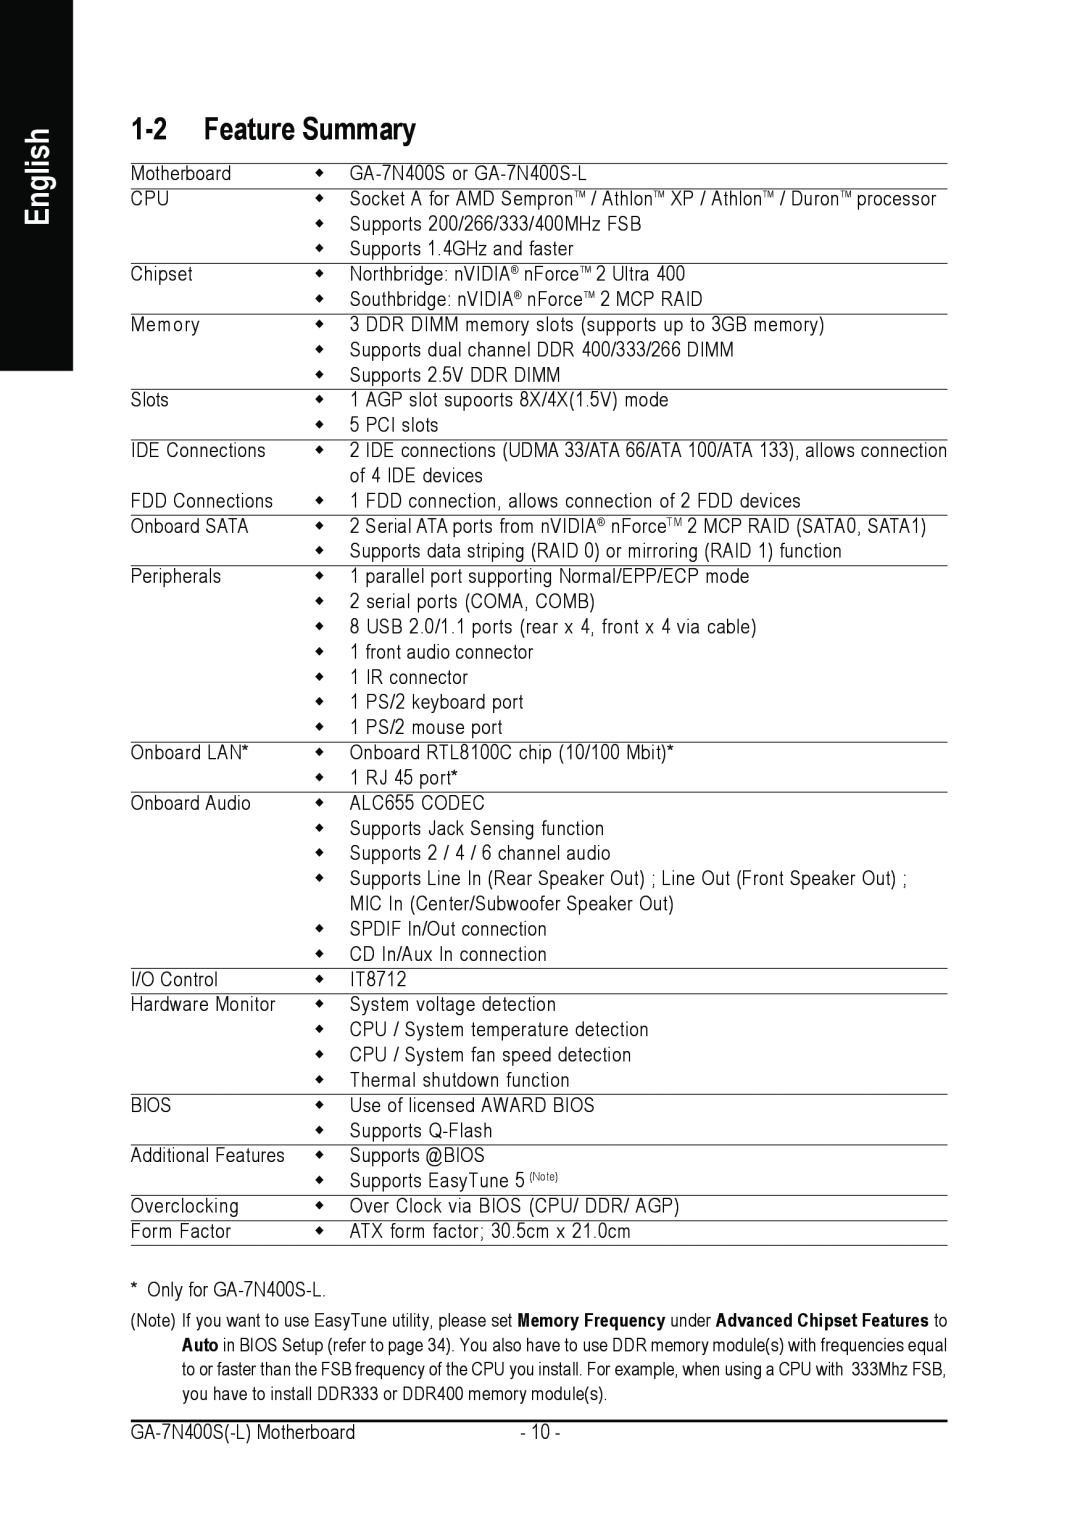 Gigabyte GA-7N400S-L user manual Feature Summary, English, Serial ATA ports from nVIDIA nForceTM 2 MCP RAID SATA0, SATA1 